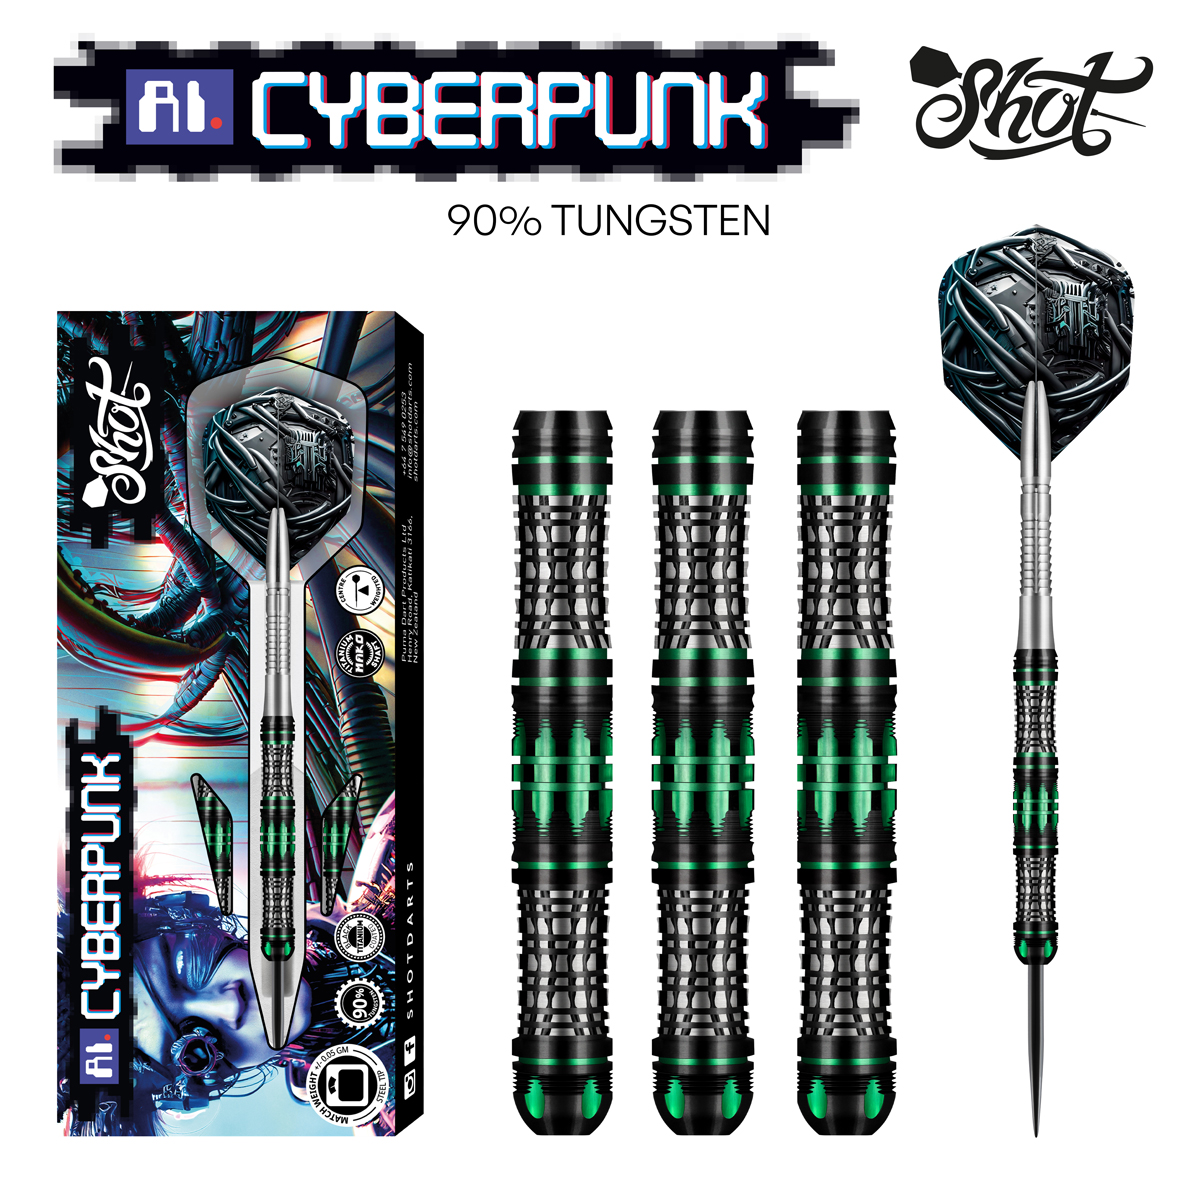 AI Cyberpunk Steel Tip Dart Set - 90% Tungsten Barrels    